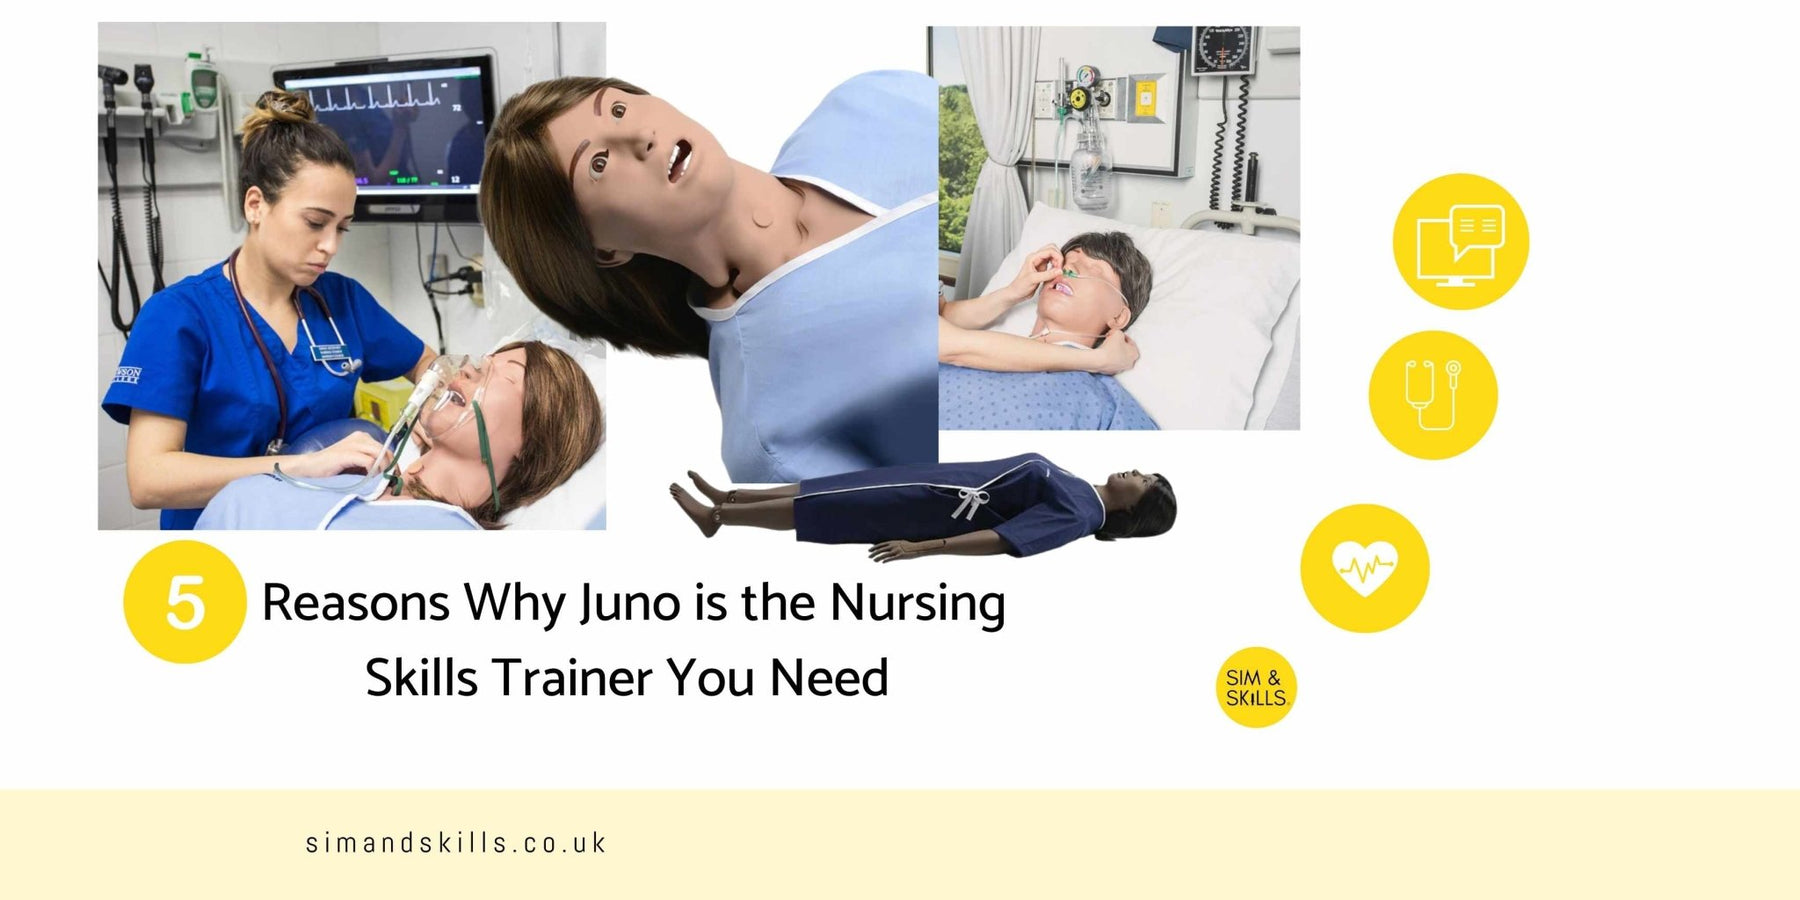 5 Reasons Why Juno is the Nursing Skills Trainer You Need - Sim & Skills